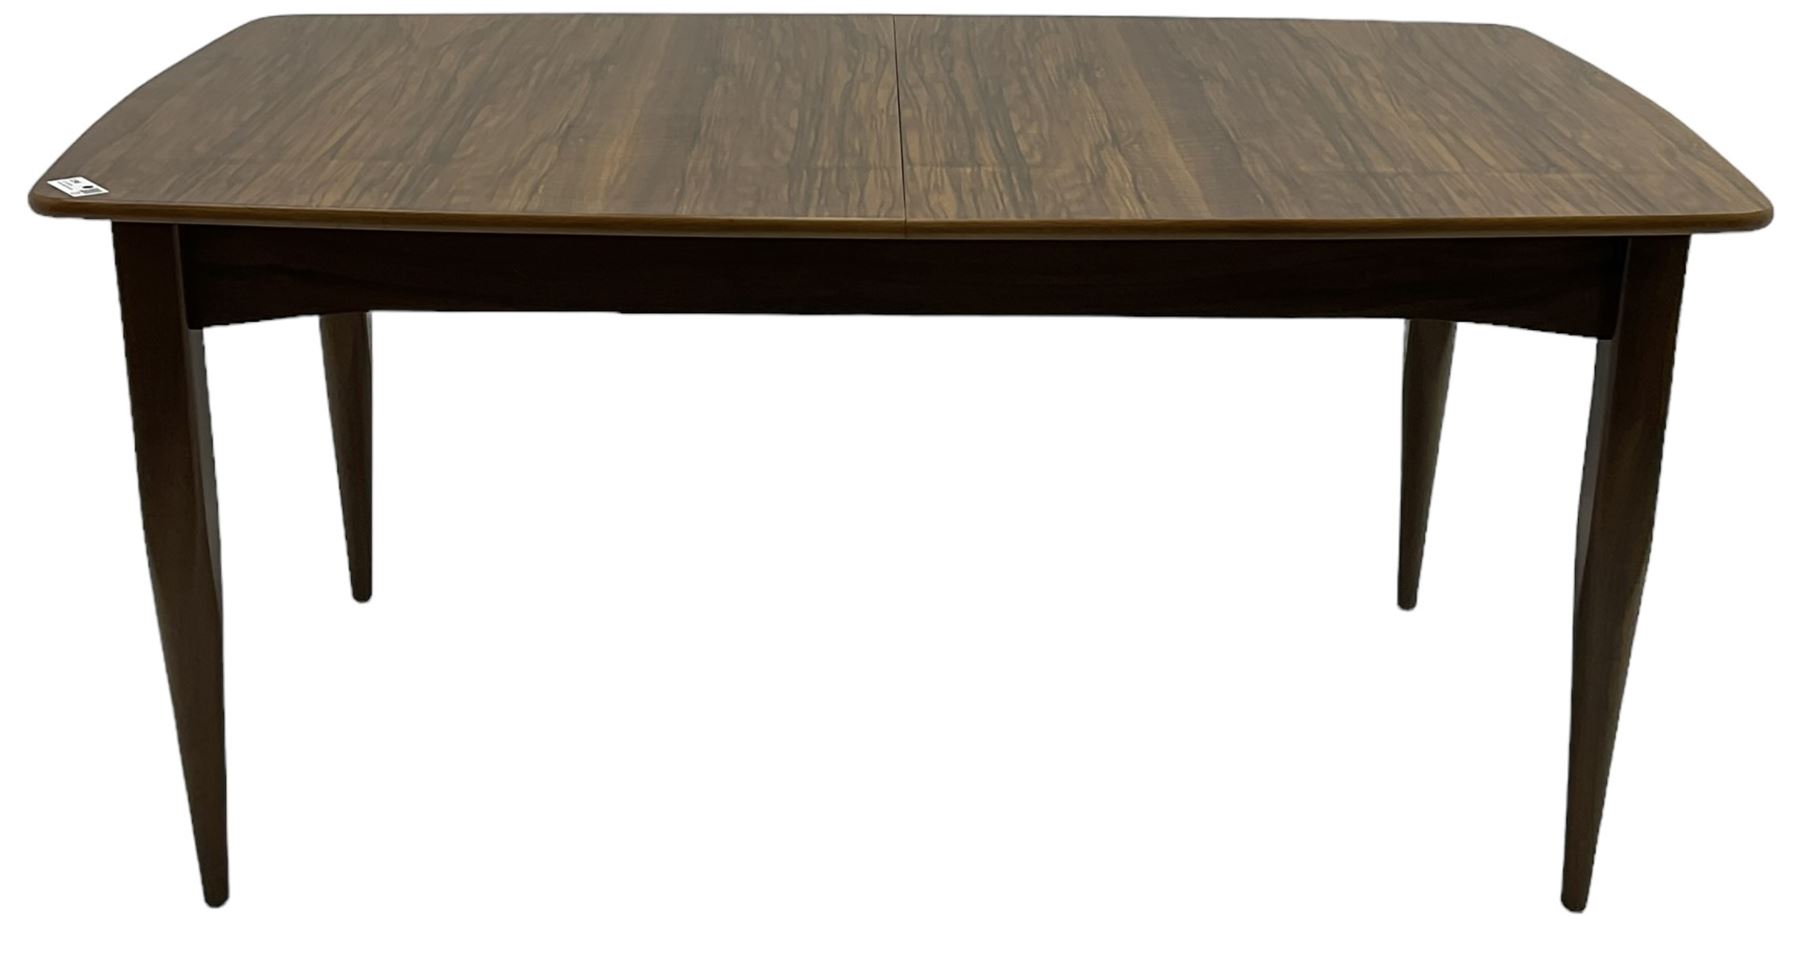 Mid-20th century figured walnut extending dining table - Image 5 of 6